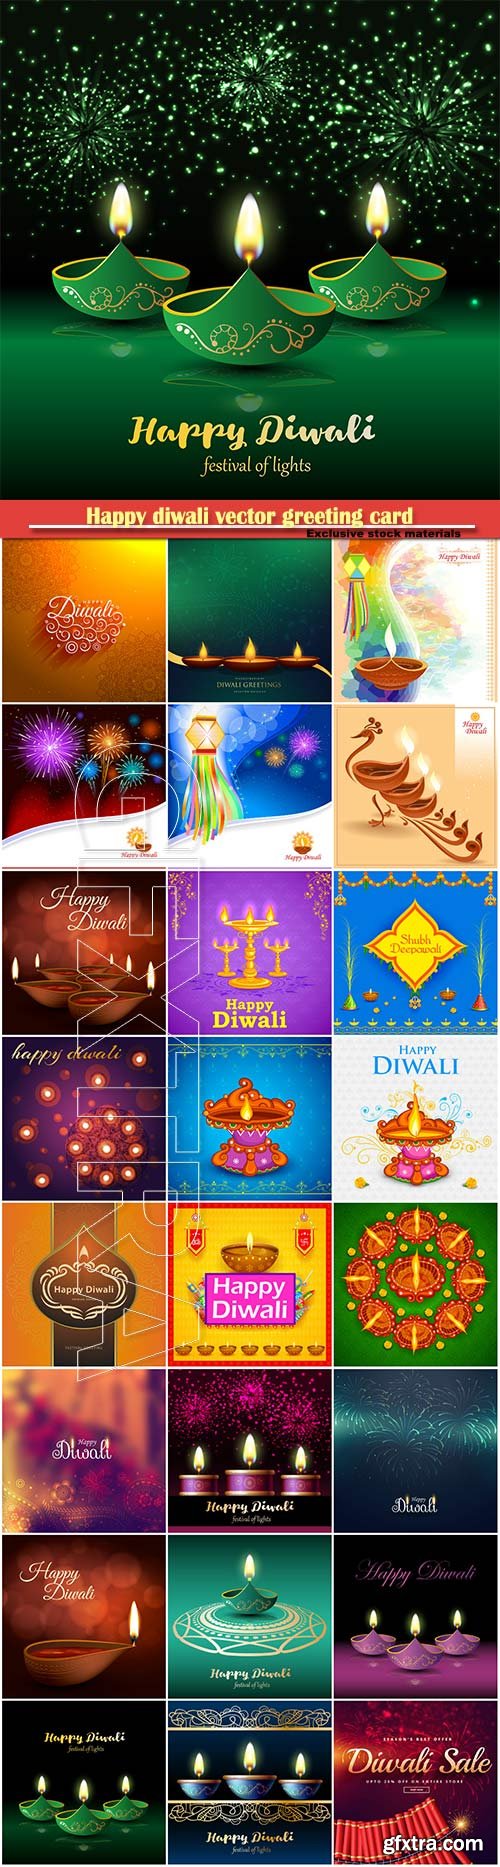 Happy diwali vector greeting card # 6